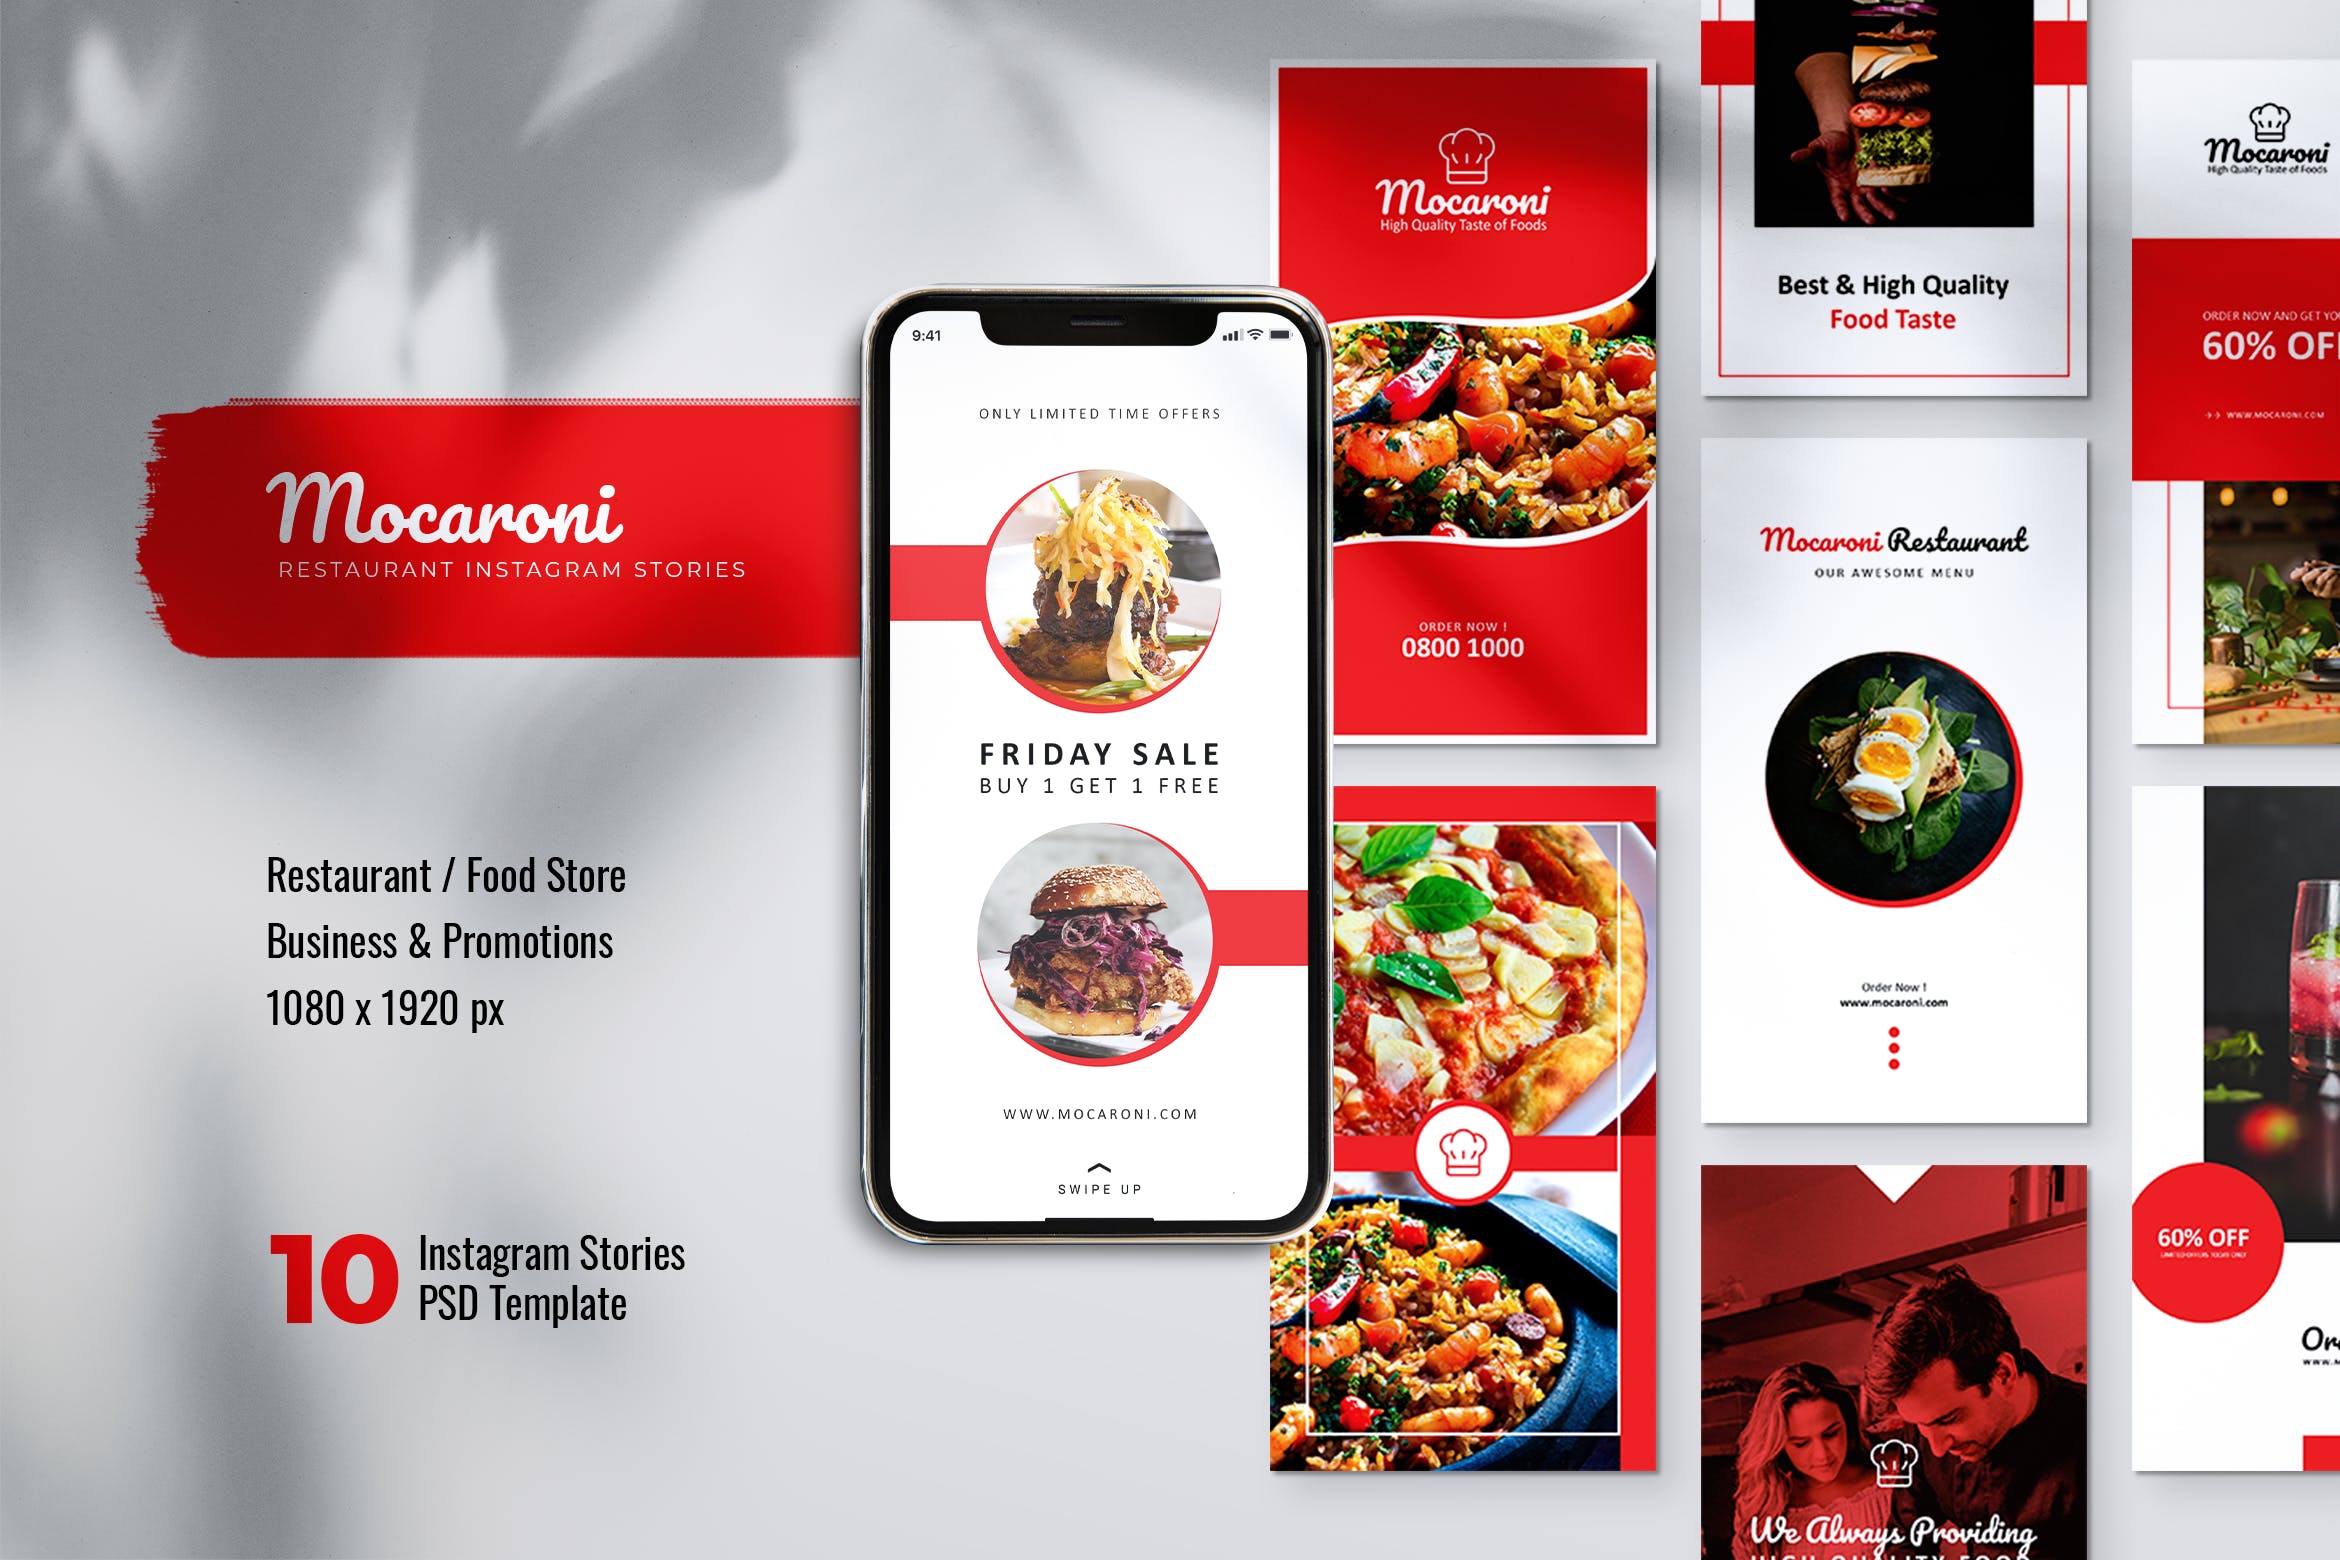 餐馆美食主题Instagram&Facebook社交品牌宣传图片设计PSD模板素材库精选 MOCARONI Restaurant/Food Store Instagram Stories插图